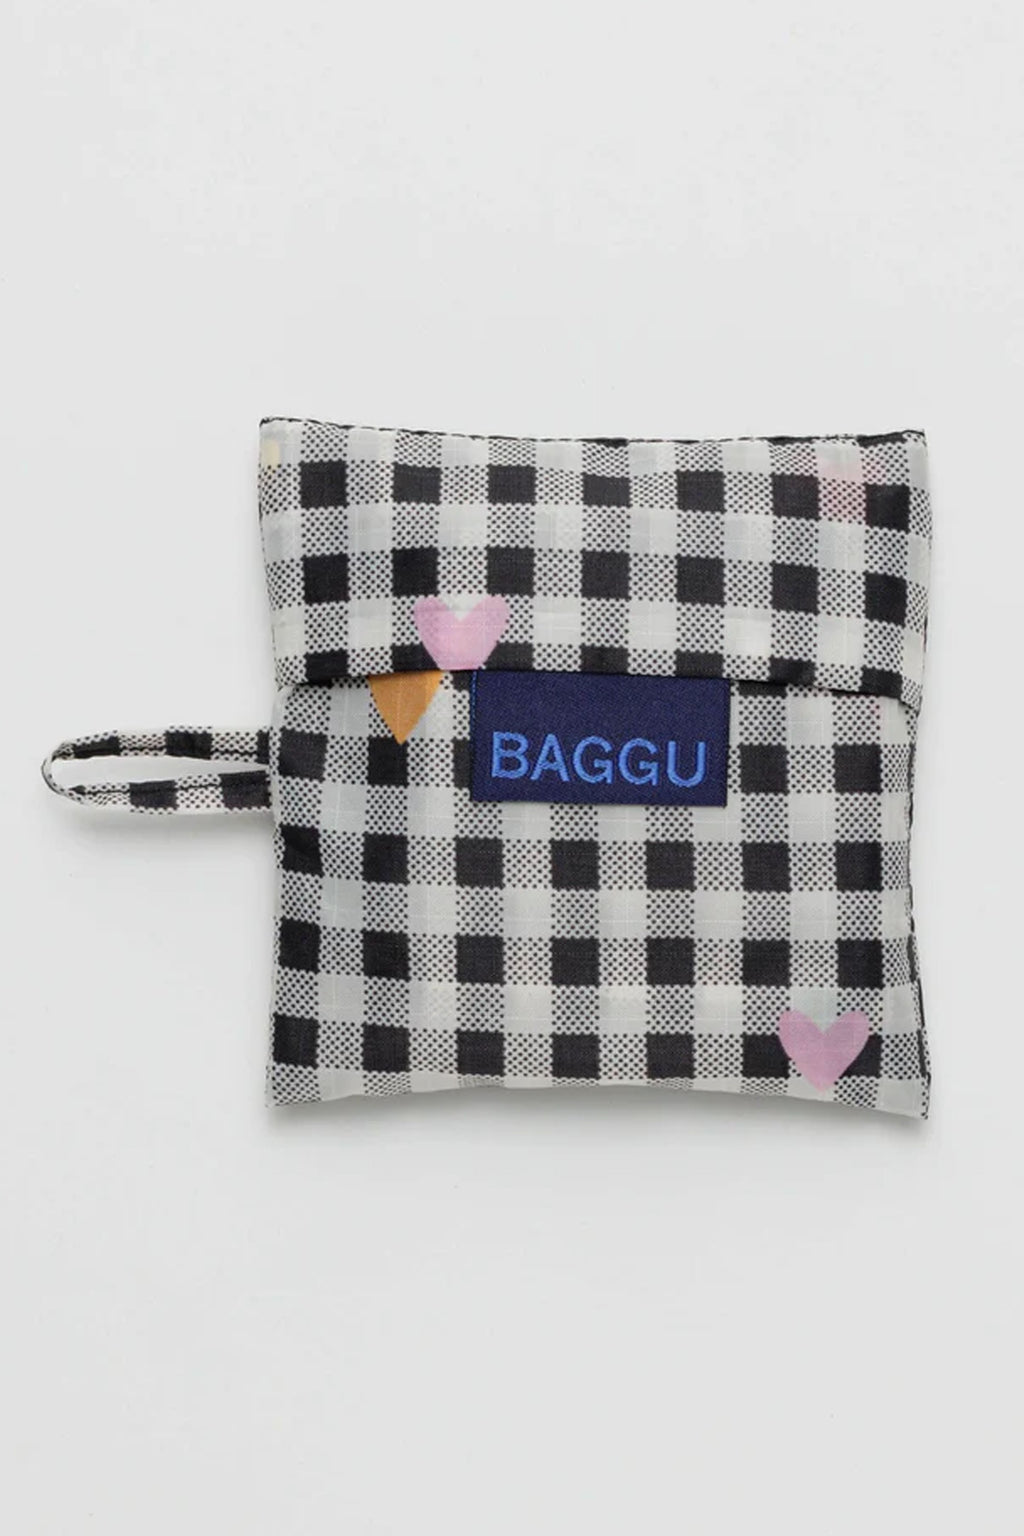 Baggu Baby Gingham Hearts Reusable Bag - The Mercantile London